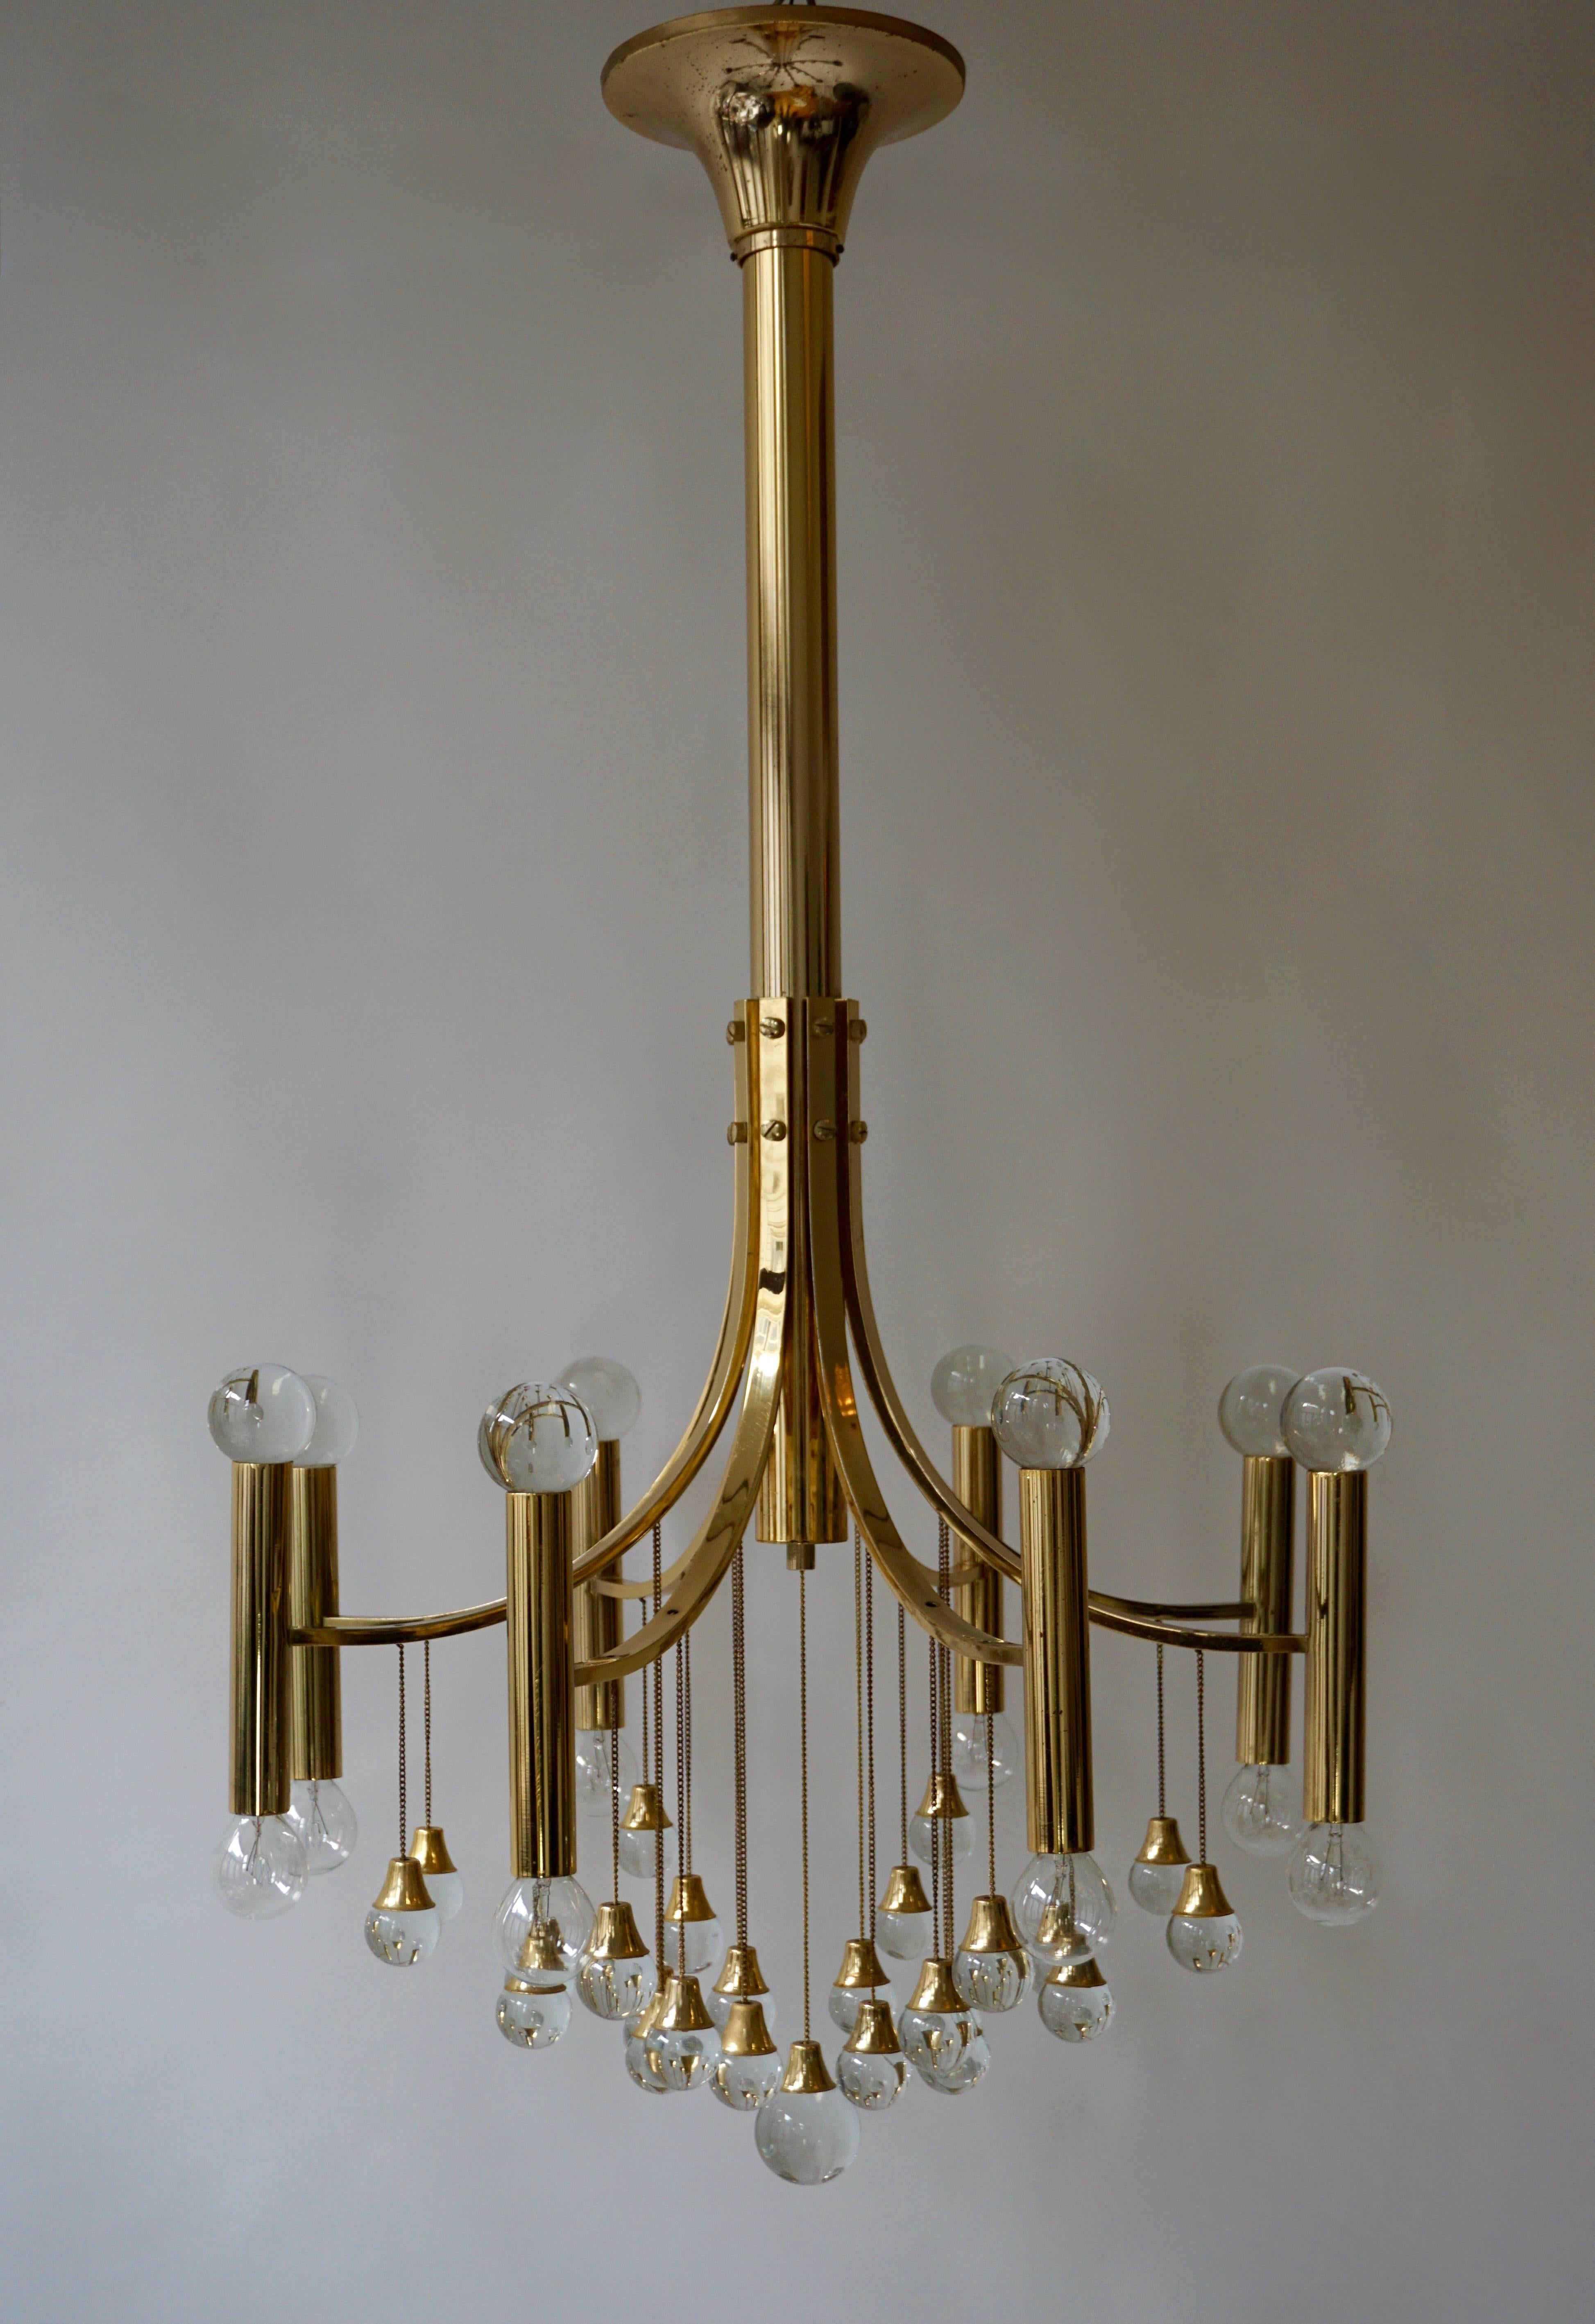 20th Century Italian Brass and Glass Chandelier by Sciolari